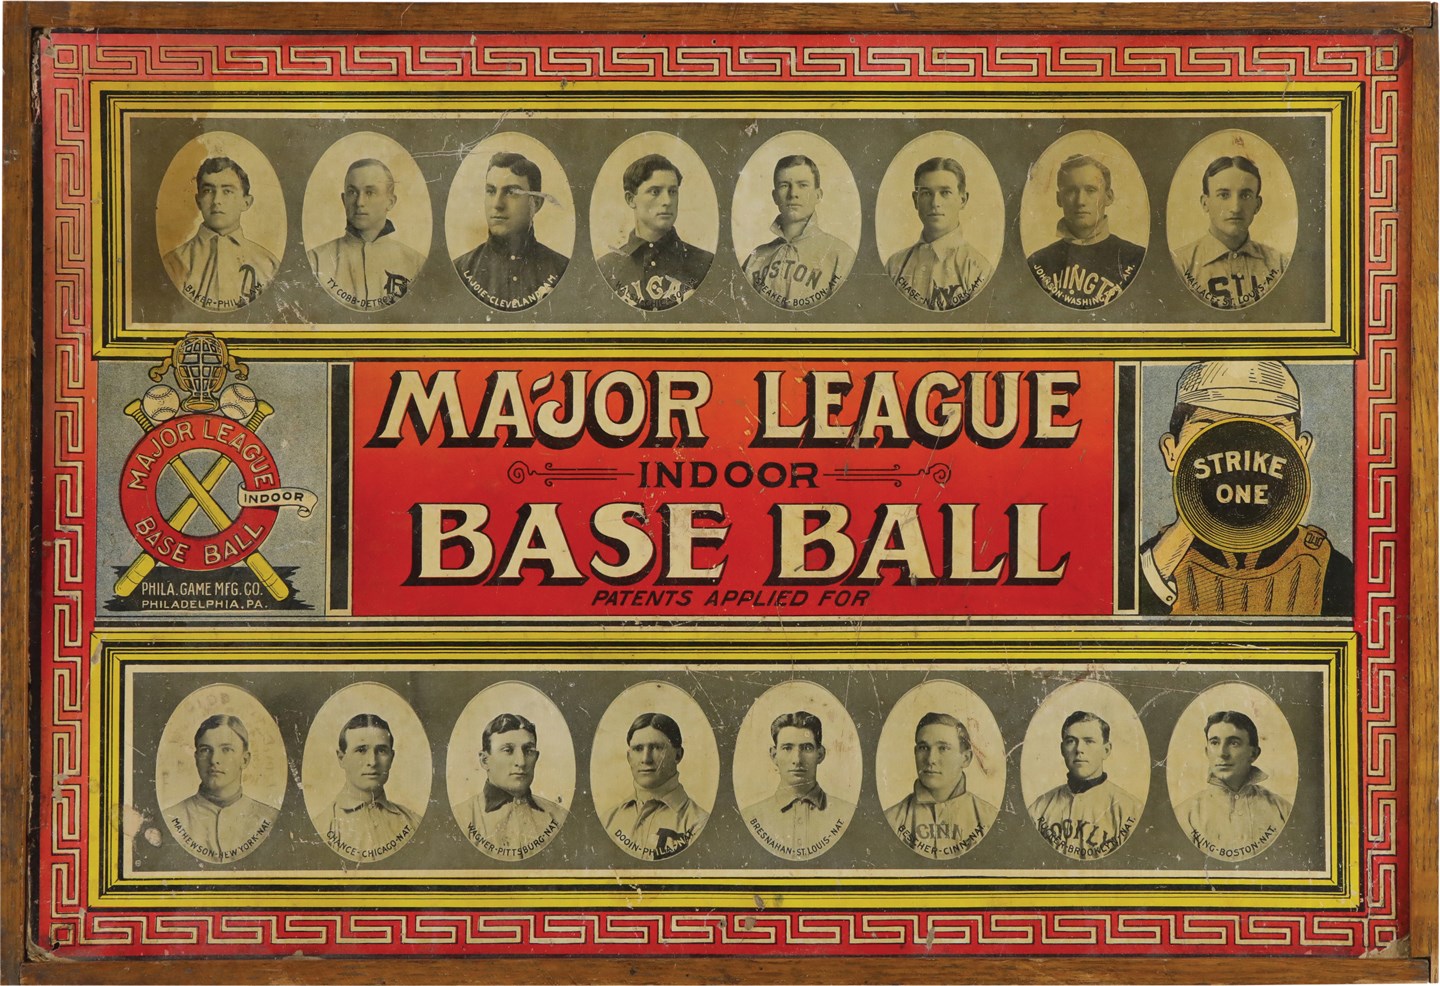 Baseball Memorabilia - 1913 Major League Indoor Baseball Game w/Players